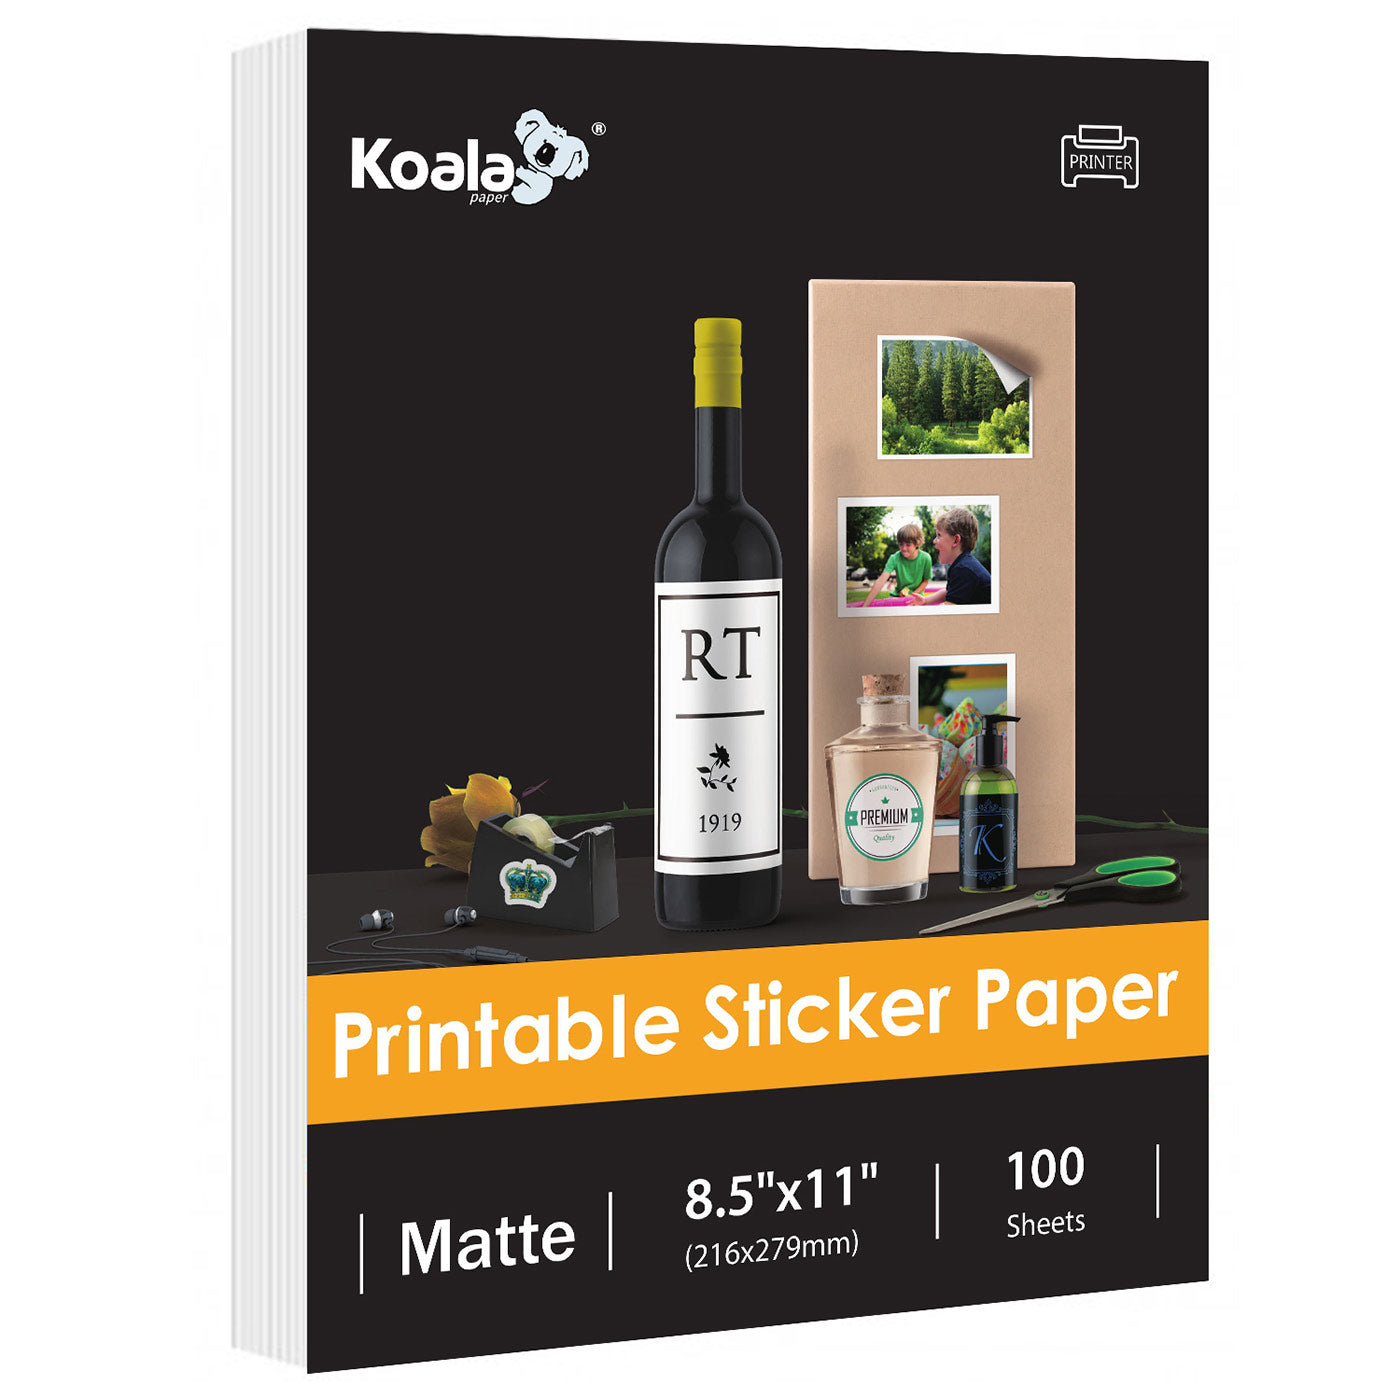 Koala Waterproof Matte Vinyl Sticker Paper Full Sheet for Inkjet